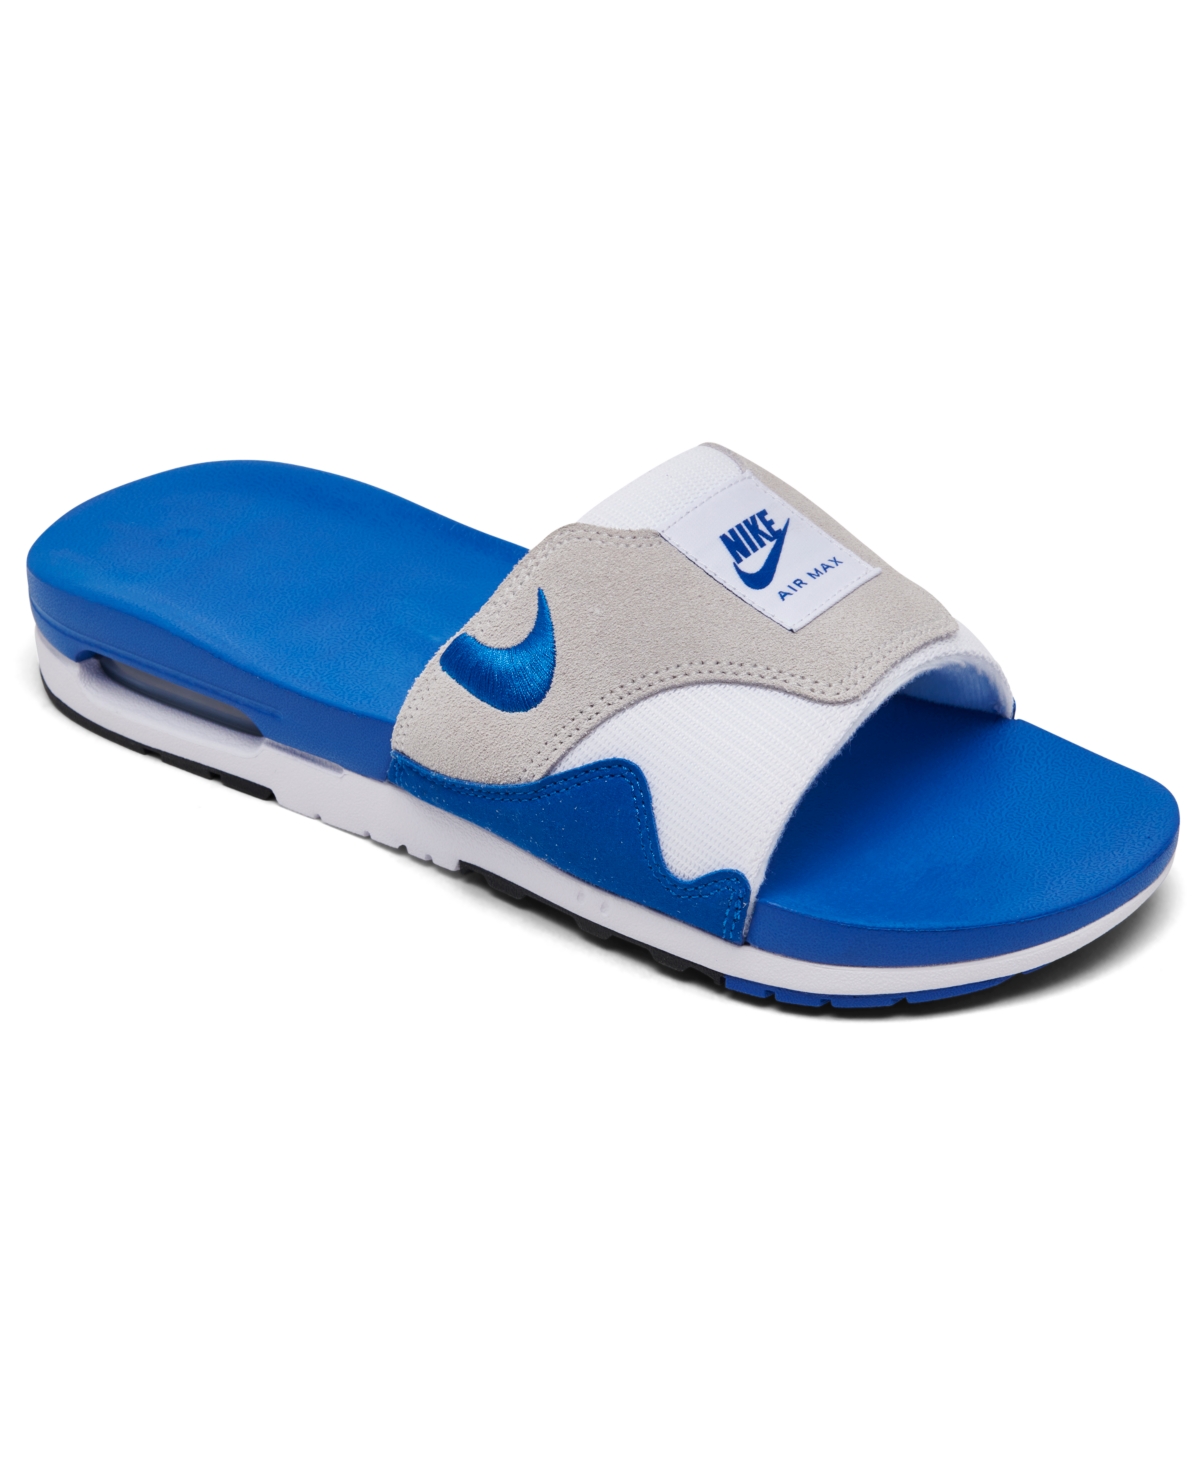 Men's Air Max 1 Slide Sandals from Finish Line - White/Royal